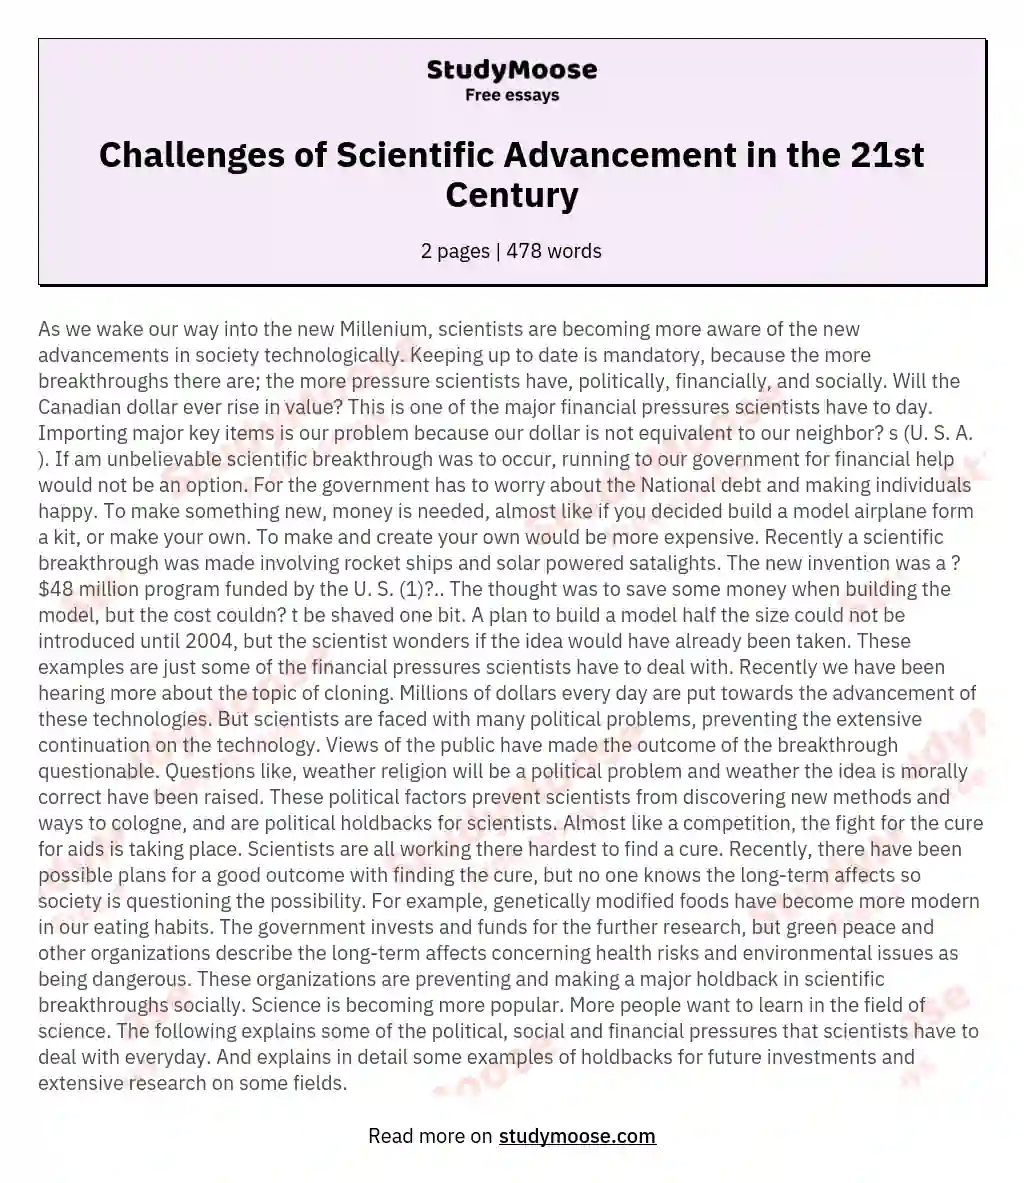 Challenges of Scientific Advancement in the 21st Century essay